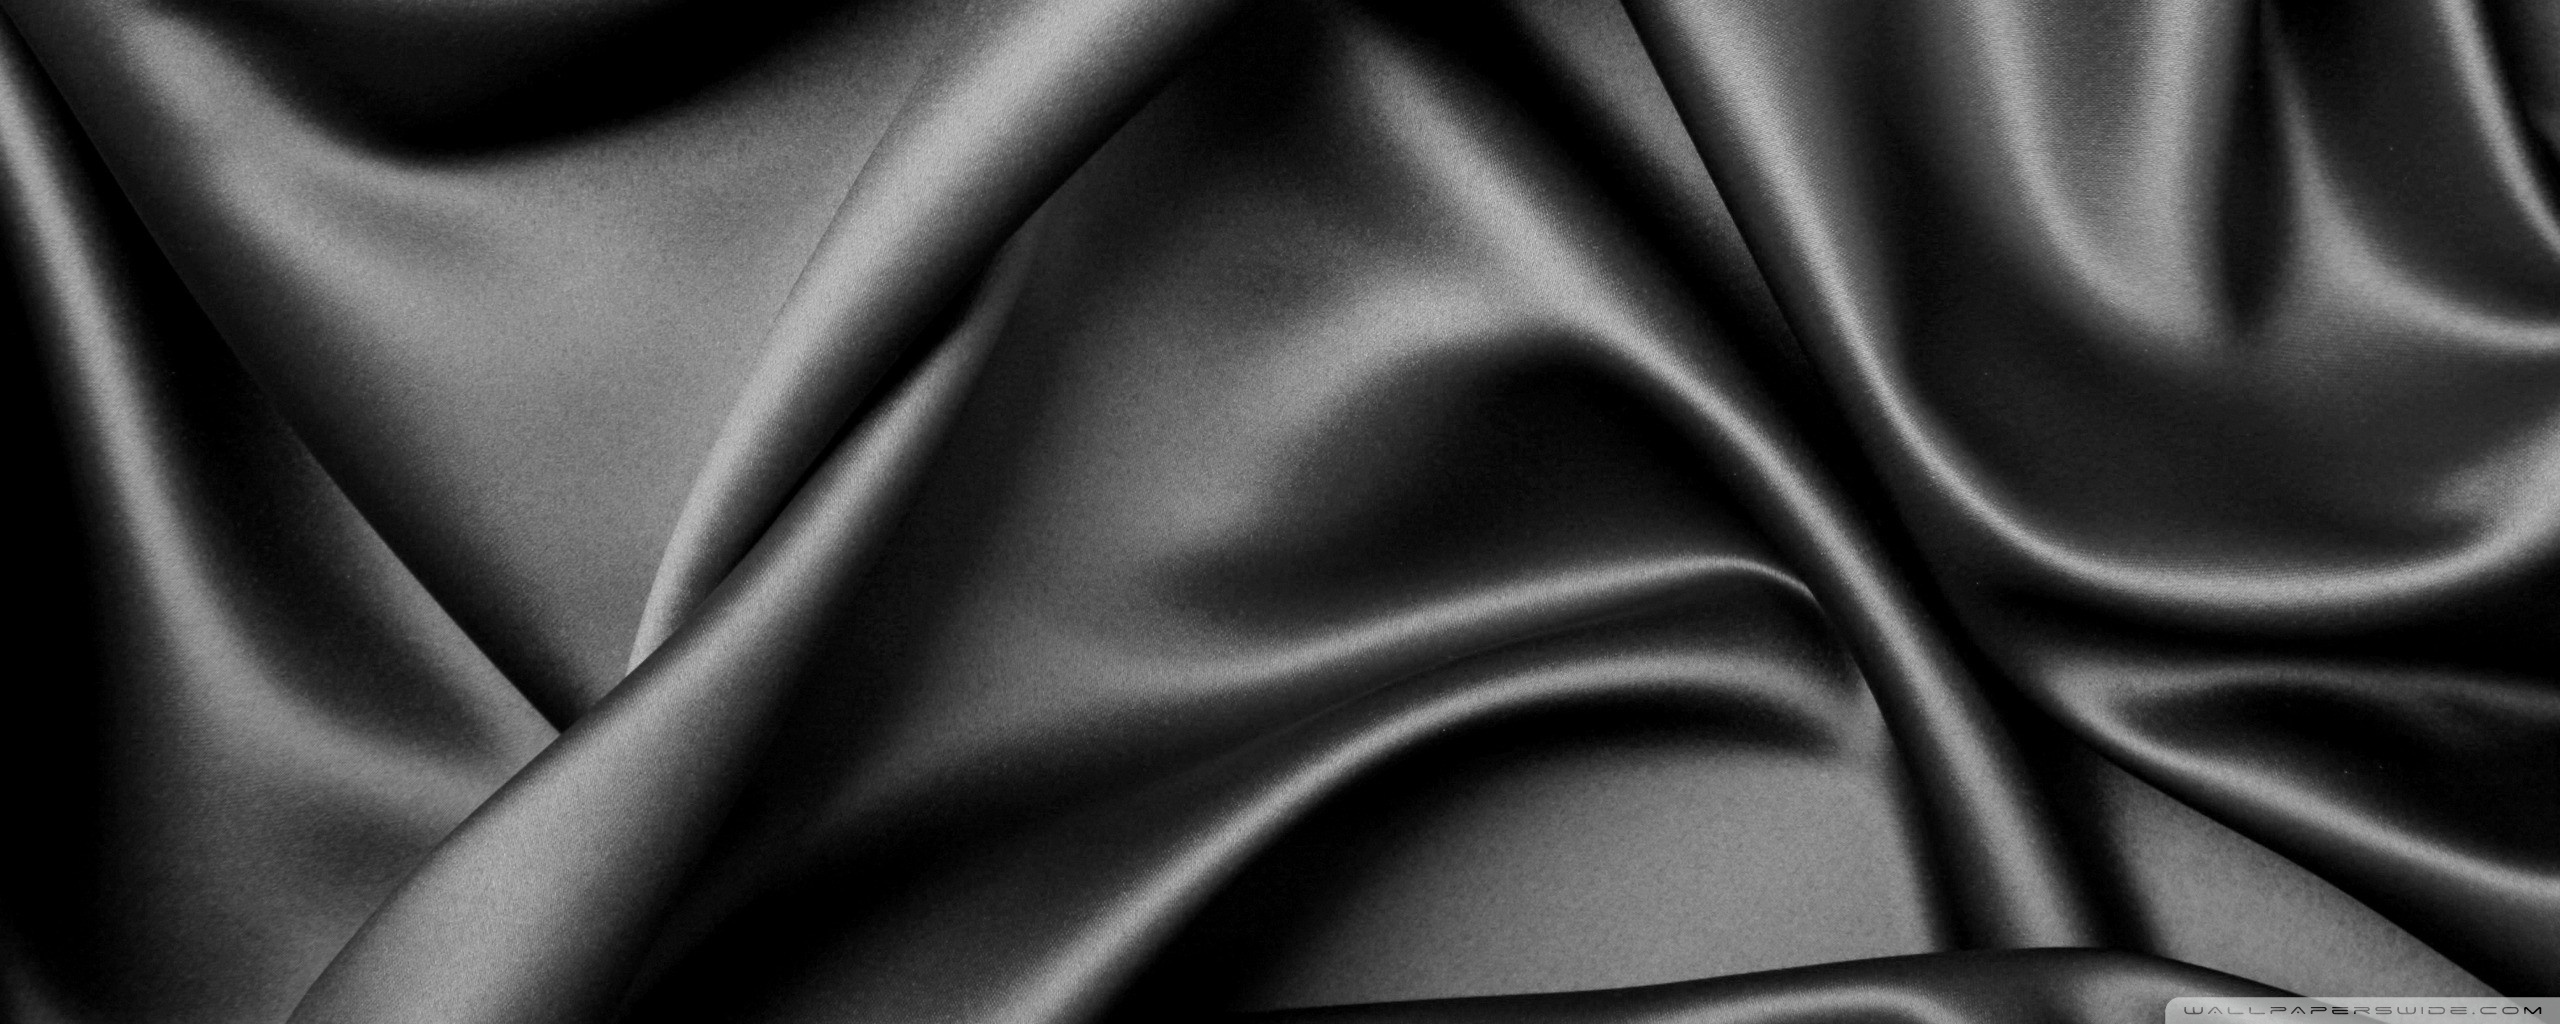 black silk wallpaper, black, satin, silk, textile, black and white